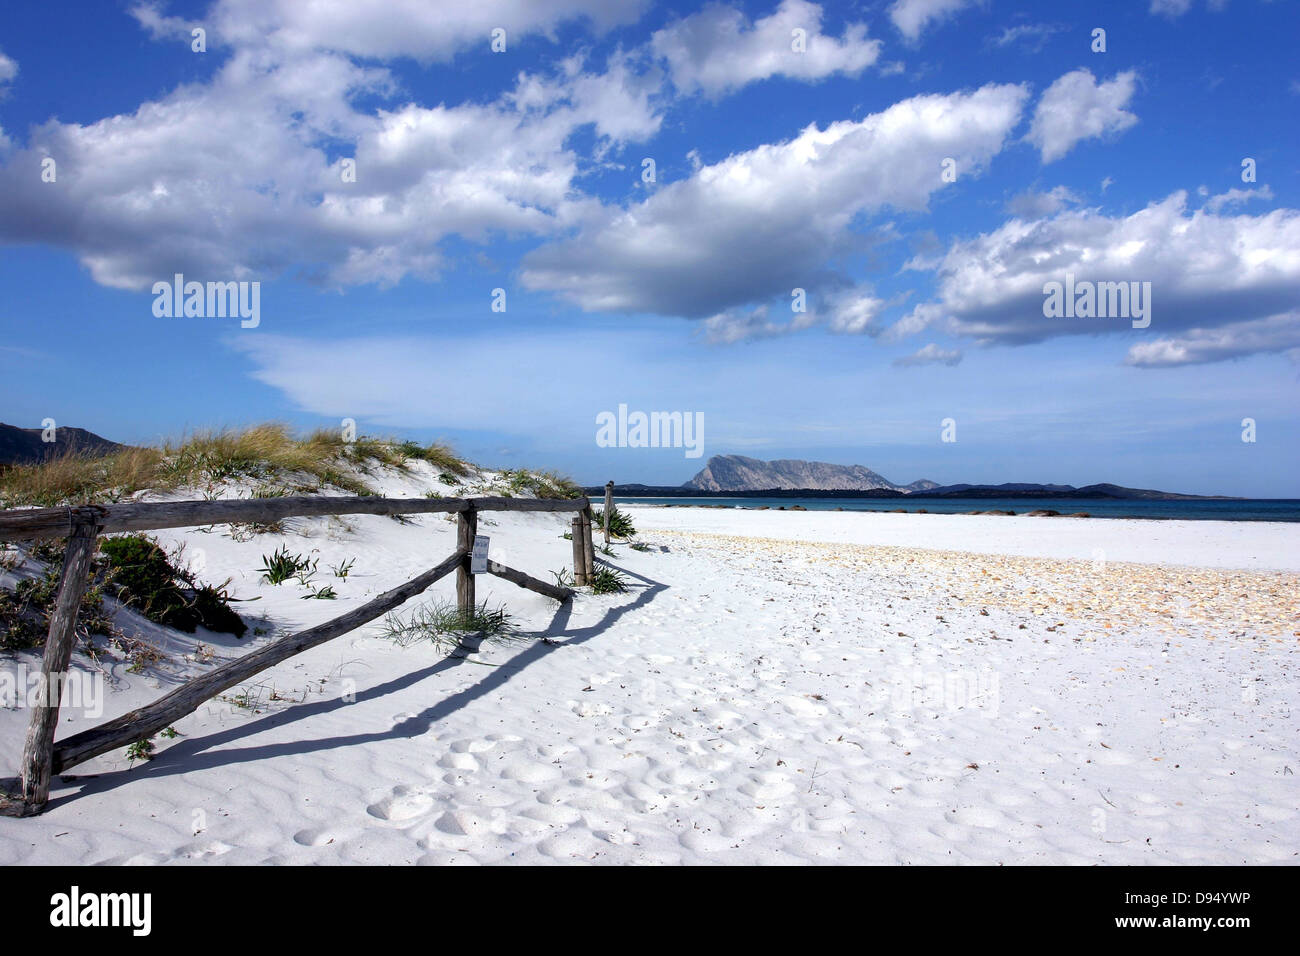 San teodoro  beach in winter  n 2 Sardegna Italy by andrea quercioli Stock Photo